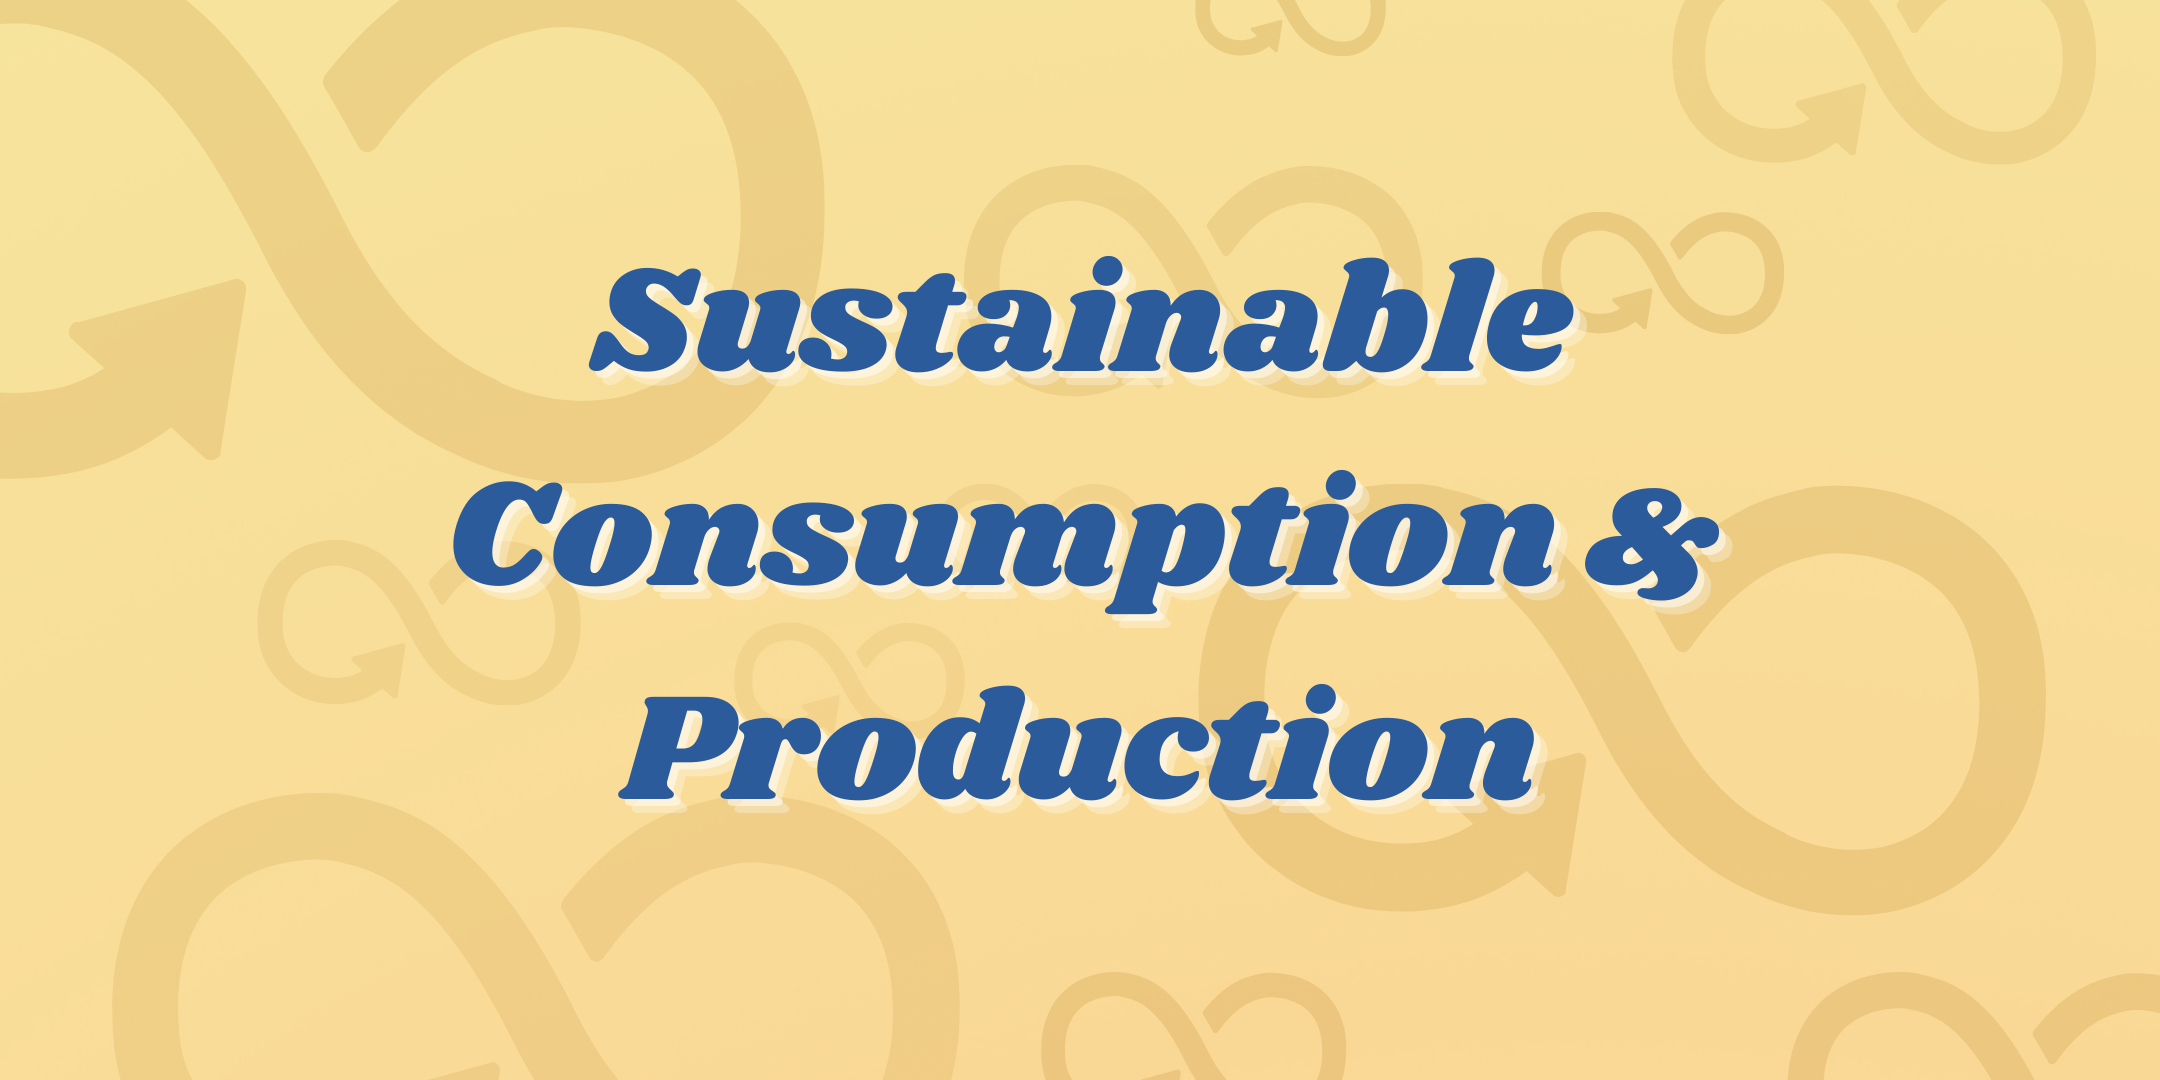 SDG 12 Sustainable Consumption & Production, Mississauga, Ontario, Canada